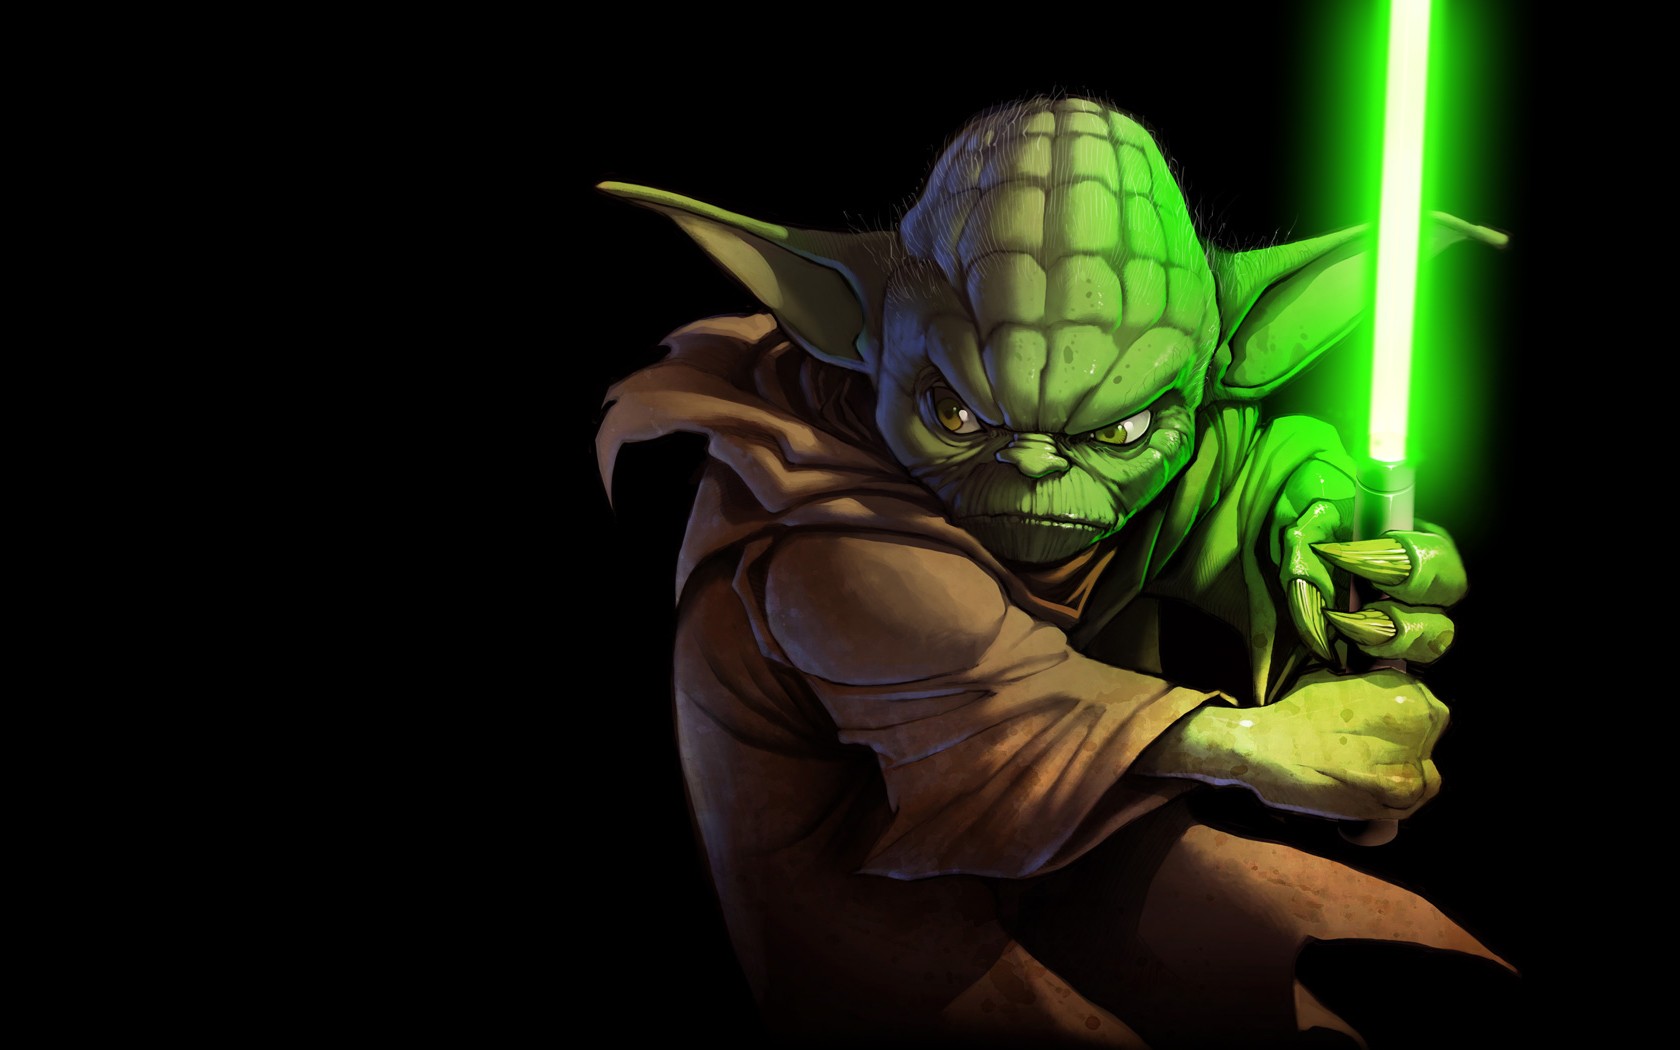 General 1680x1050 Yoda Star Wars lightsaber Jedi simple background black background Star Wars Heroes science fiction